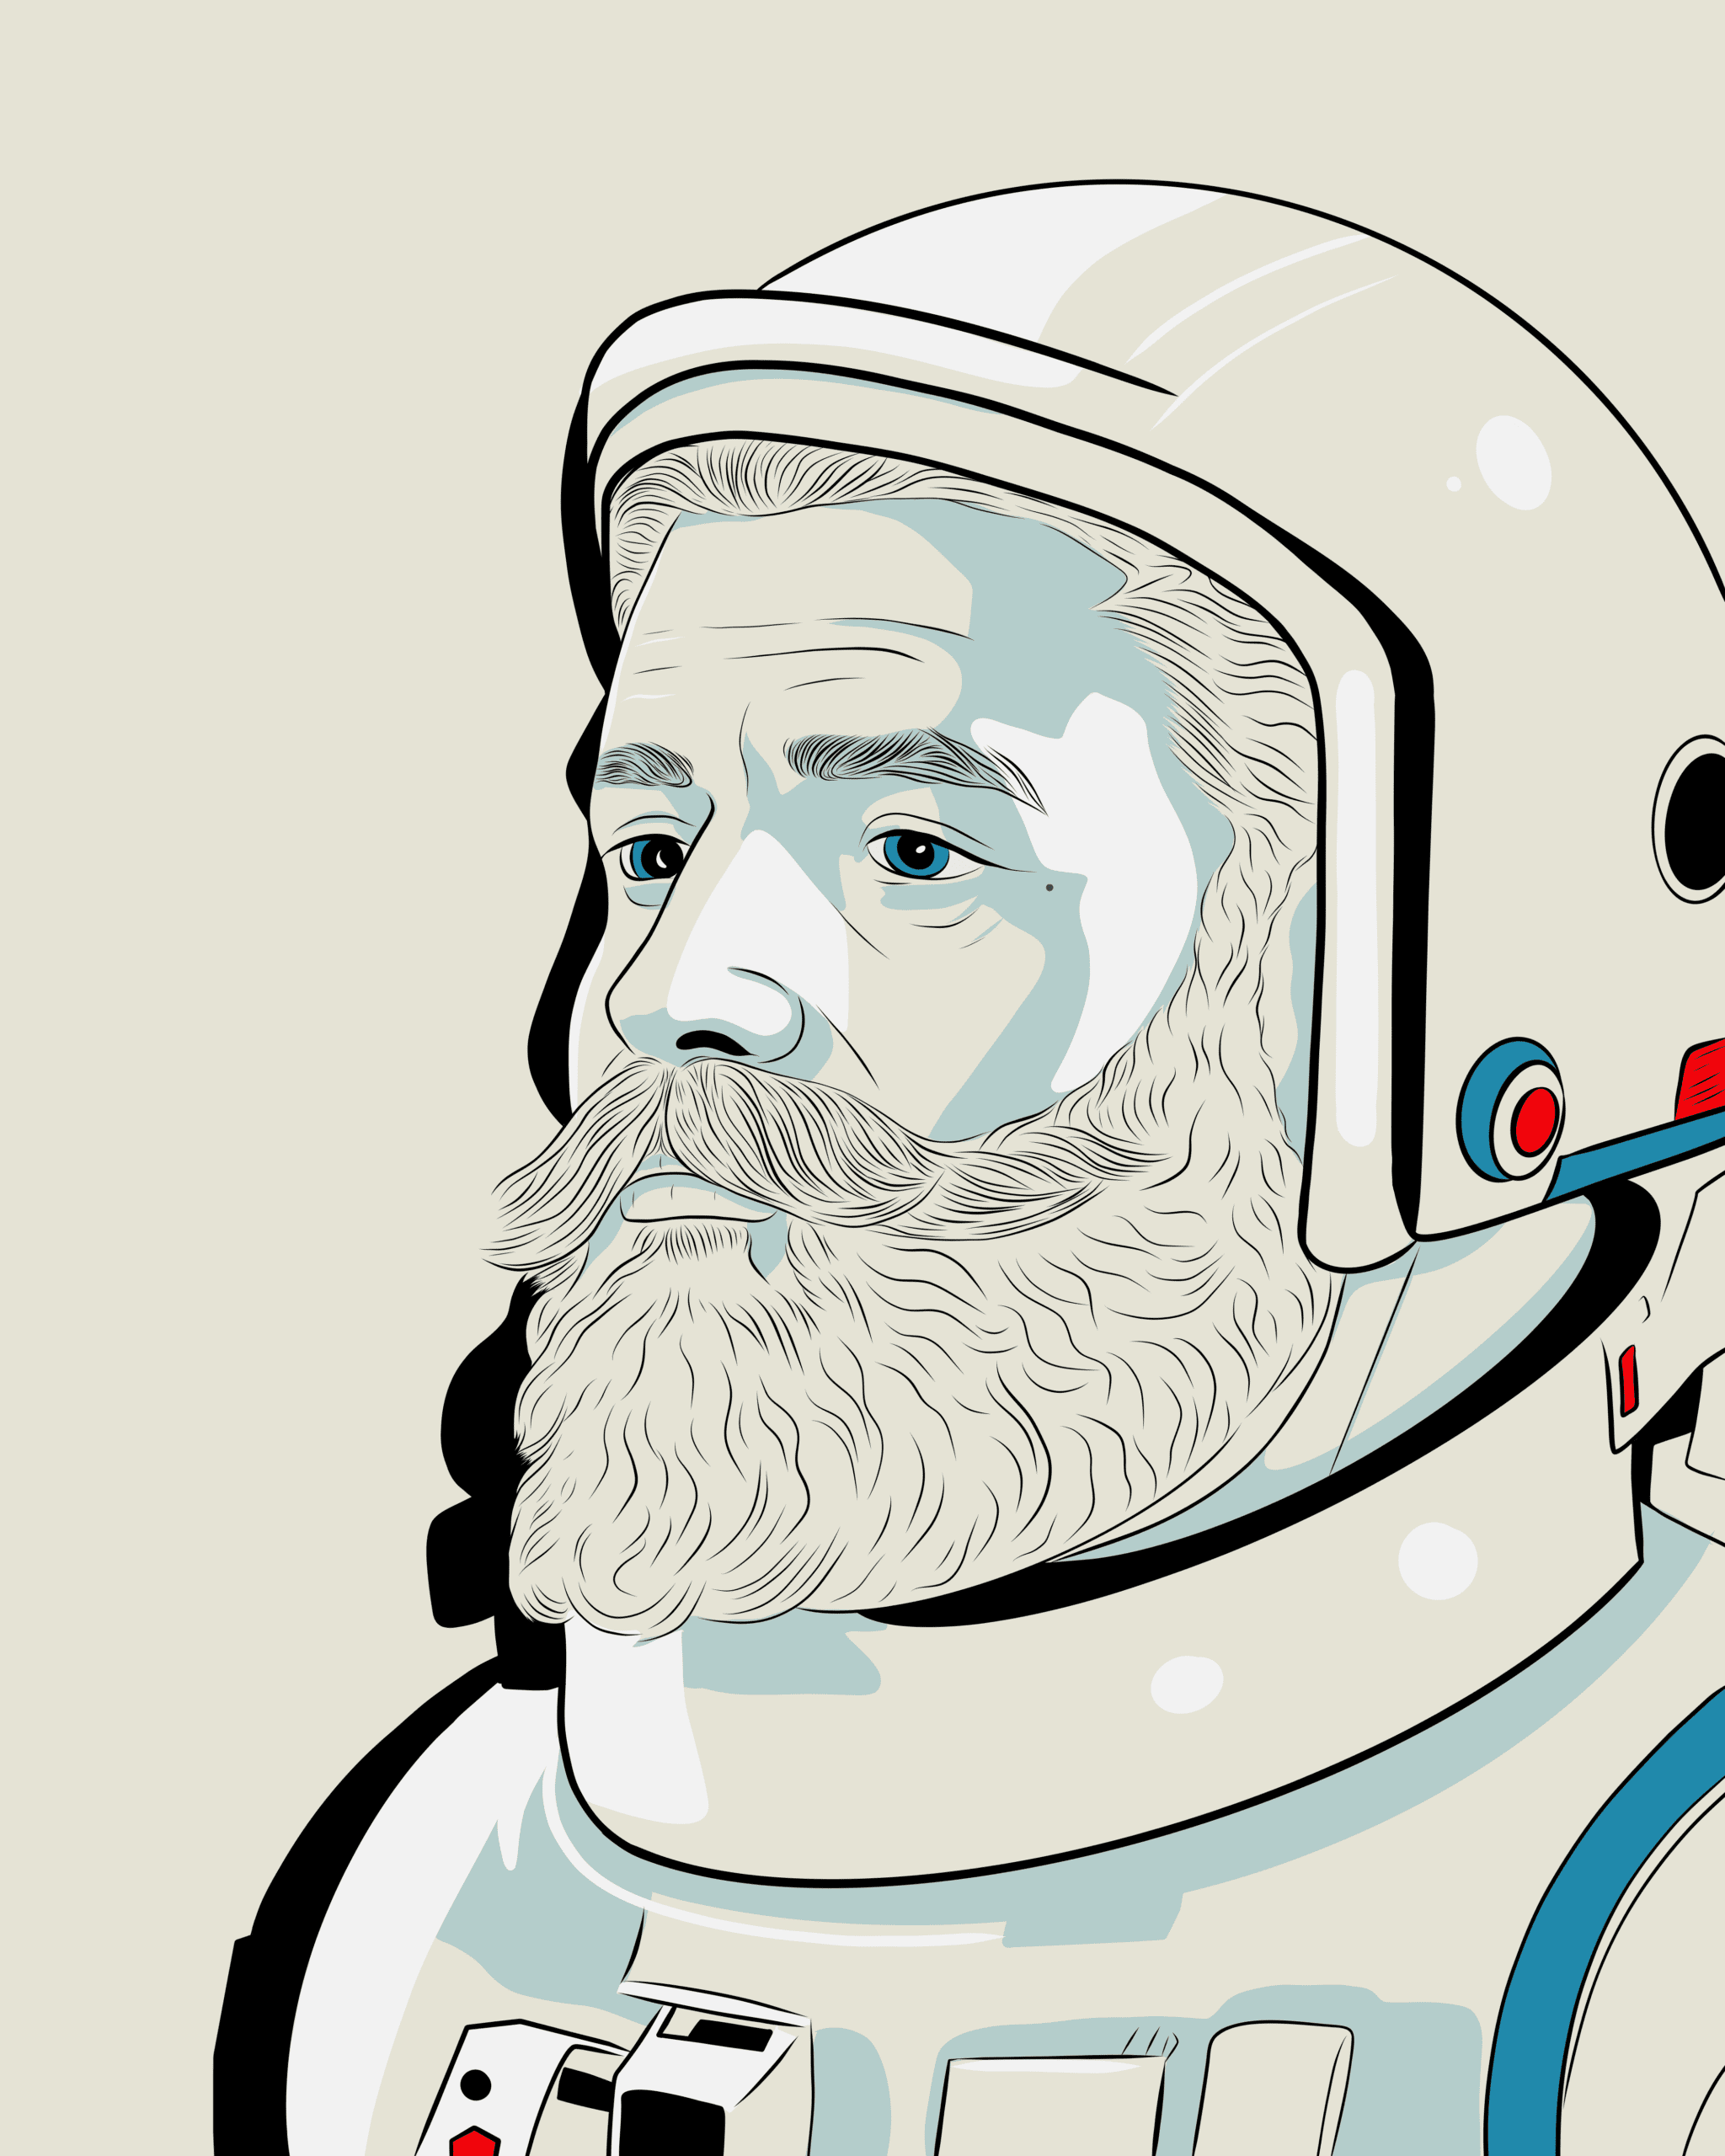 Project Prøxima: Lost in Space, Found in Solitude by Alonso Guzmán Barone